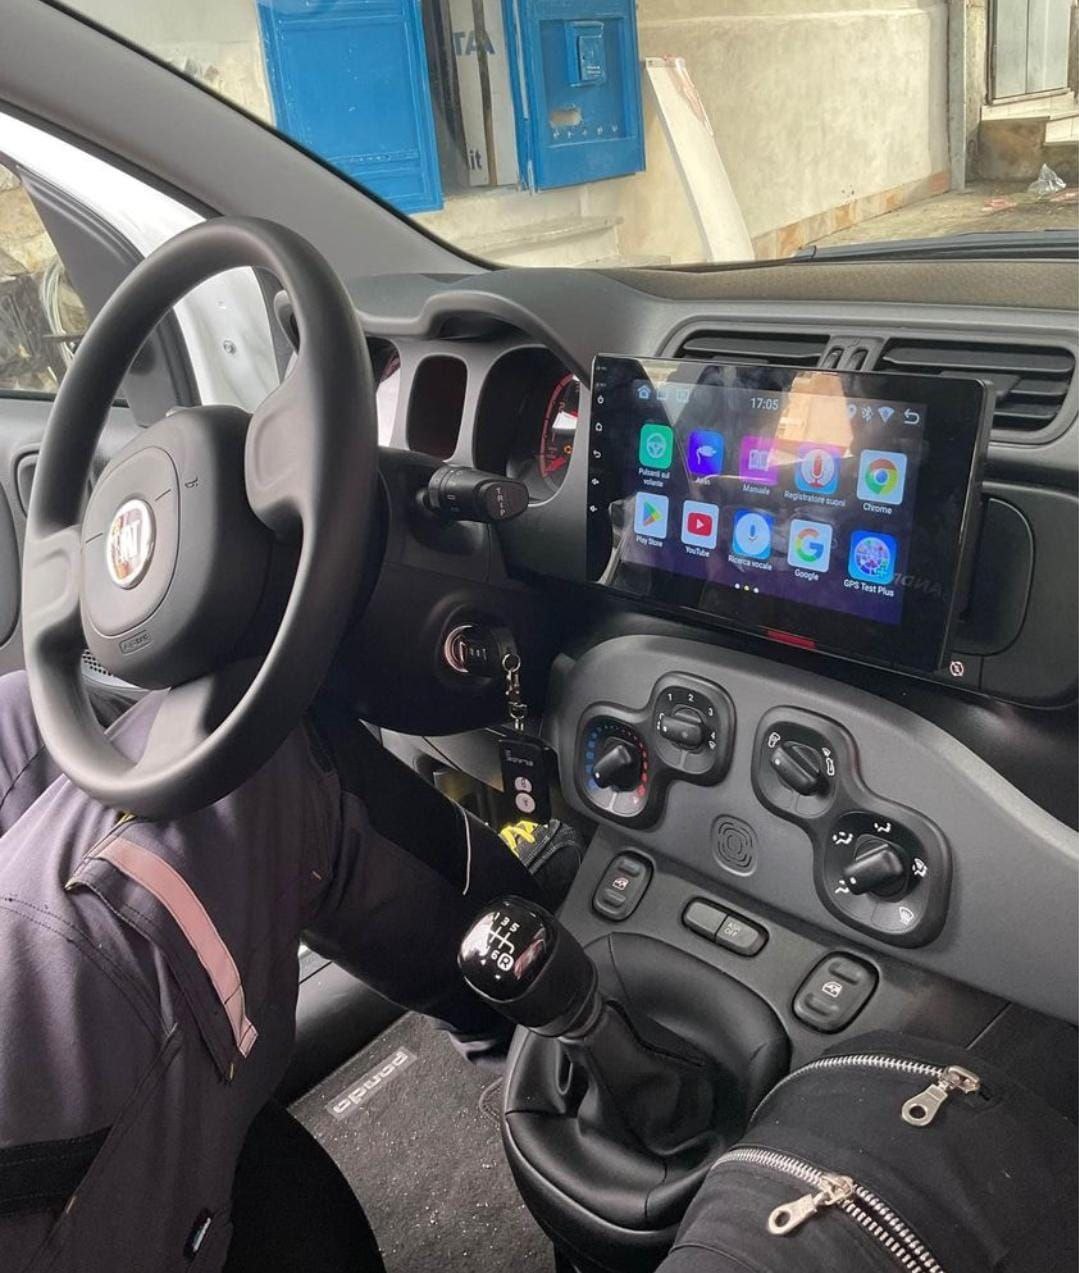 Autoradio per FIAT Panda 3a - 1Din 9Pollici, Bluetooth, Radio, Androi –  Ferraro Store